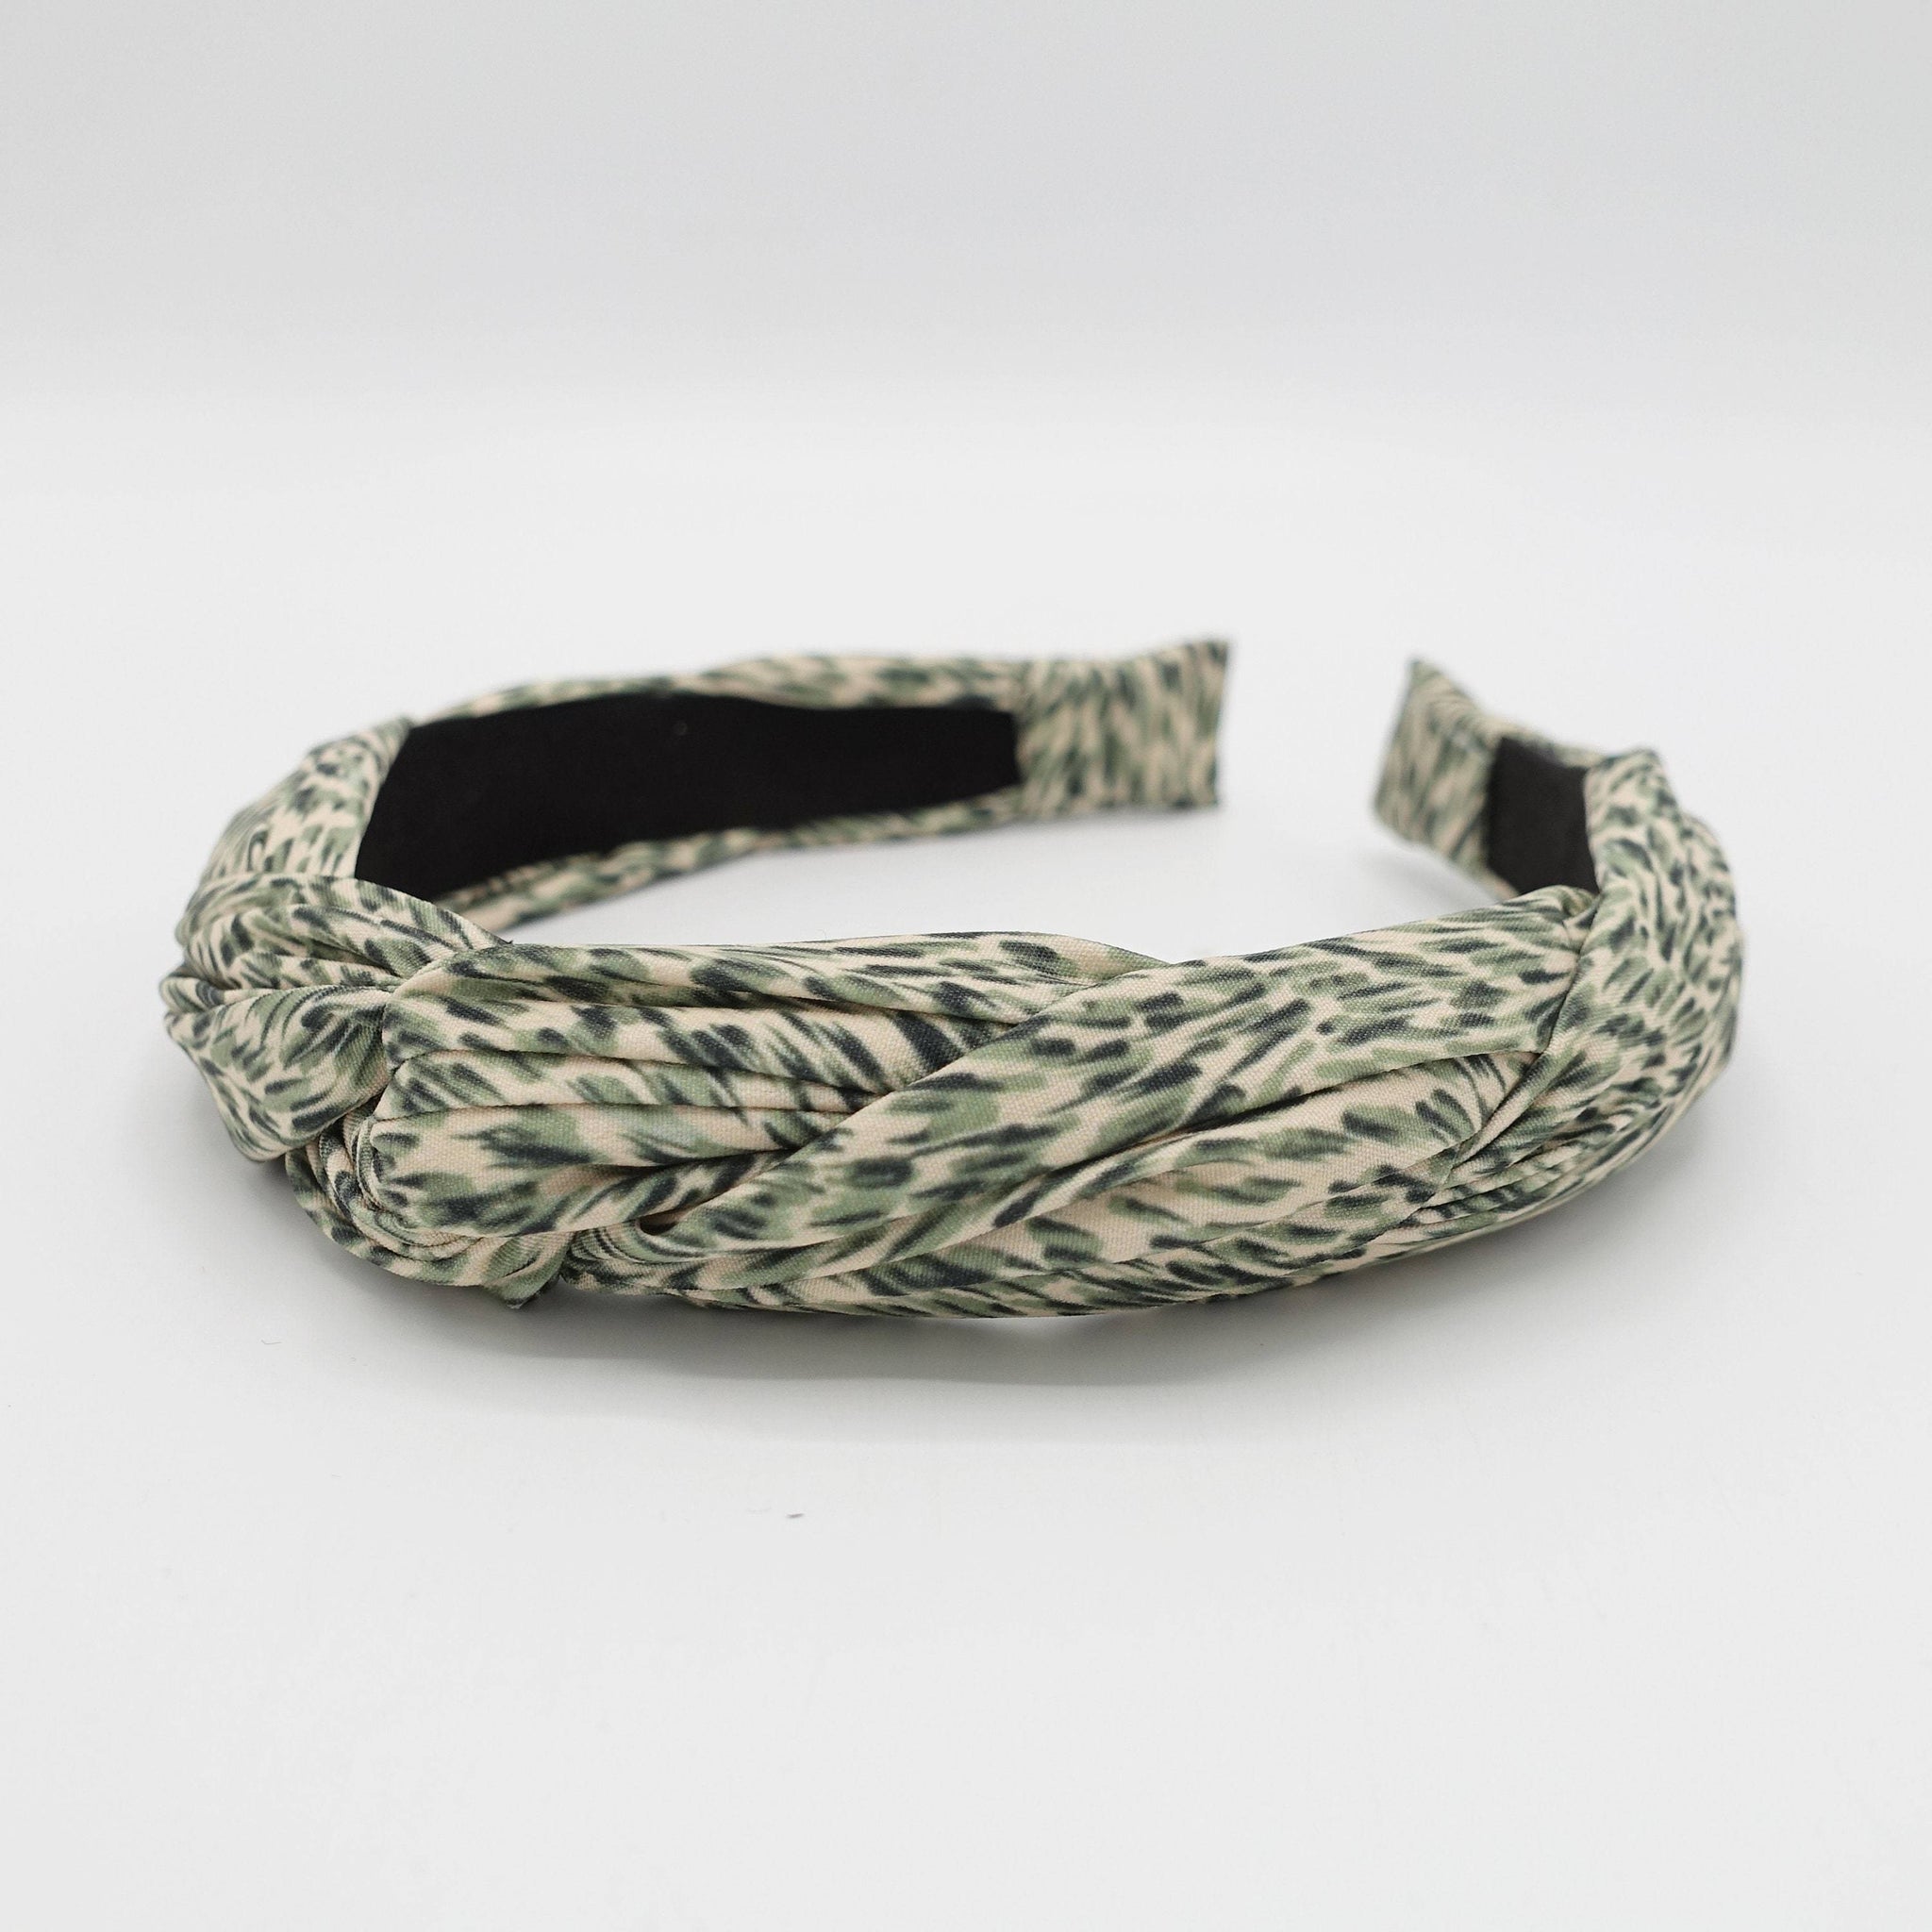 VeryShine Headband Green animal print cross headband casual hair accessory for women